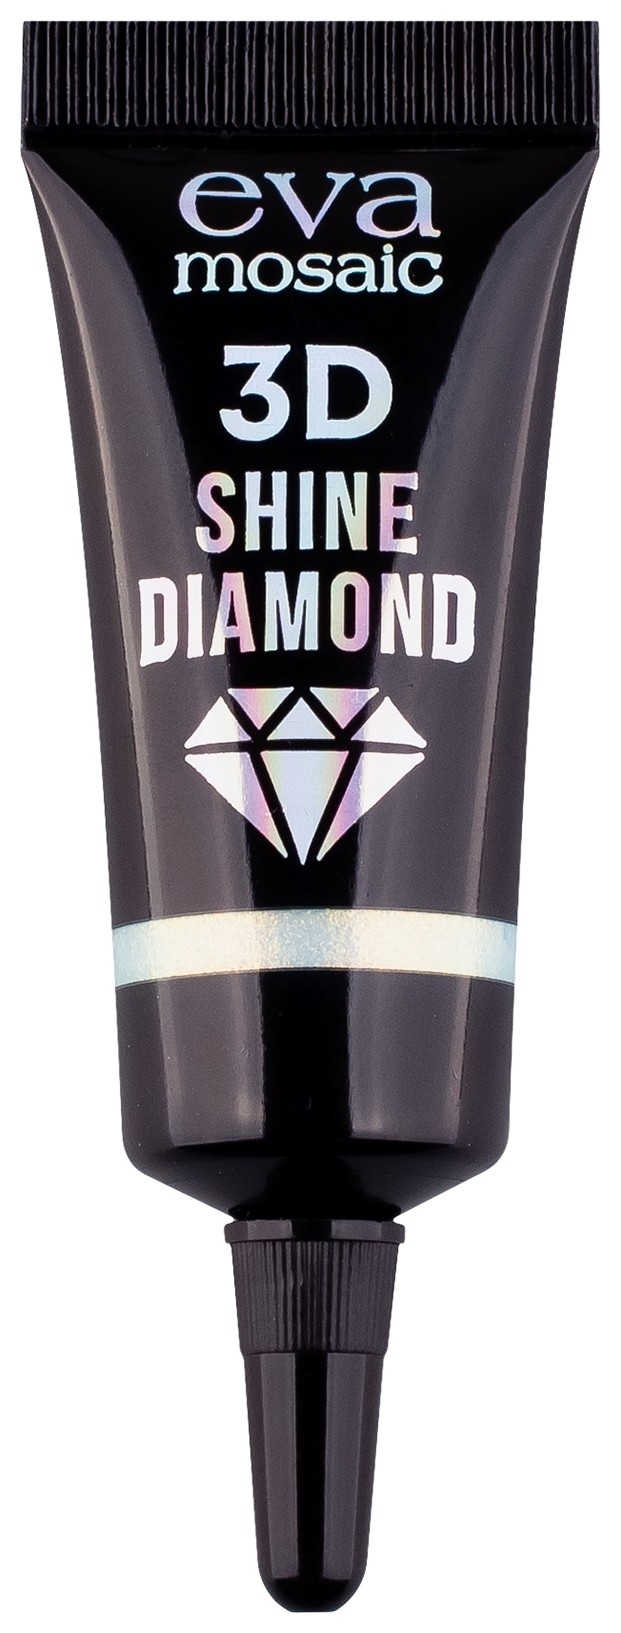 Гелевый глиттер для лица "3D Shine Diamond" отзывы